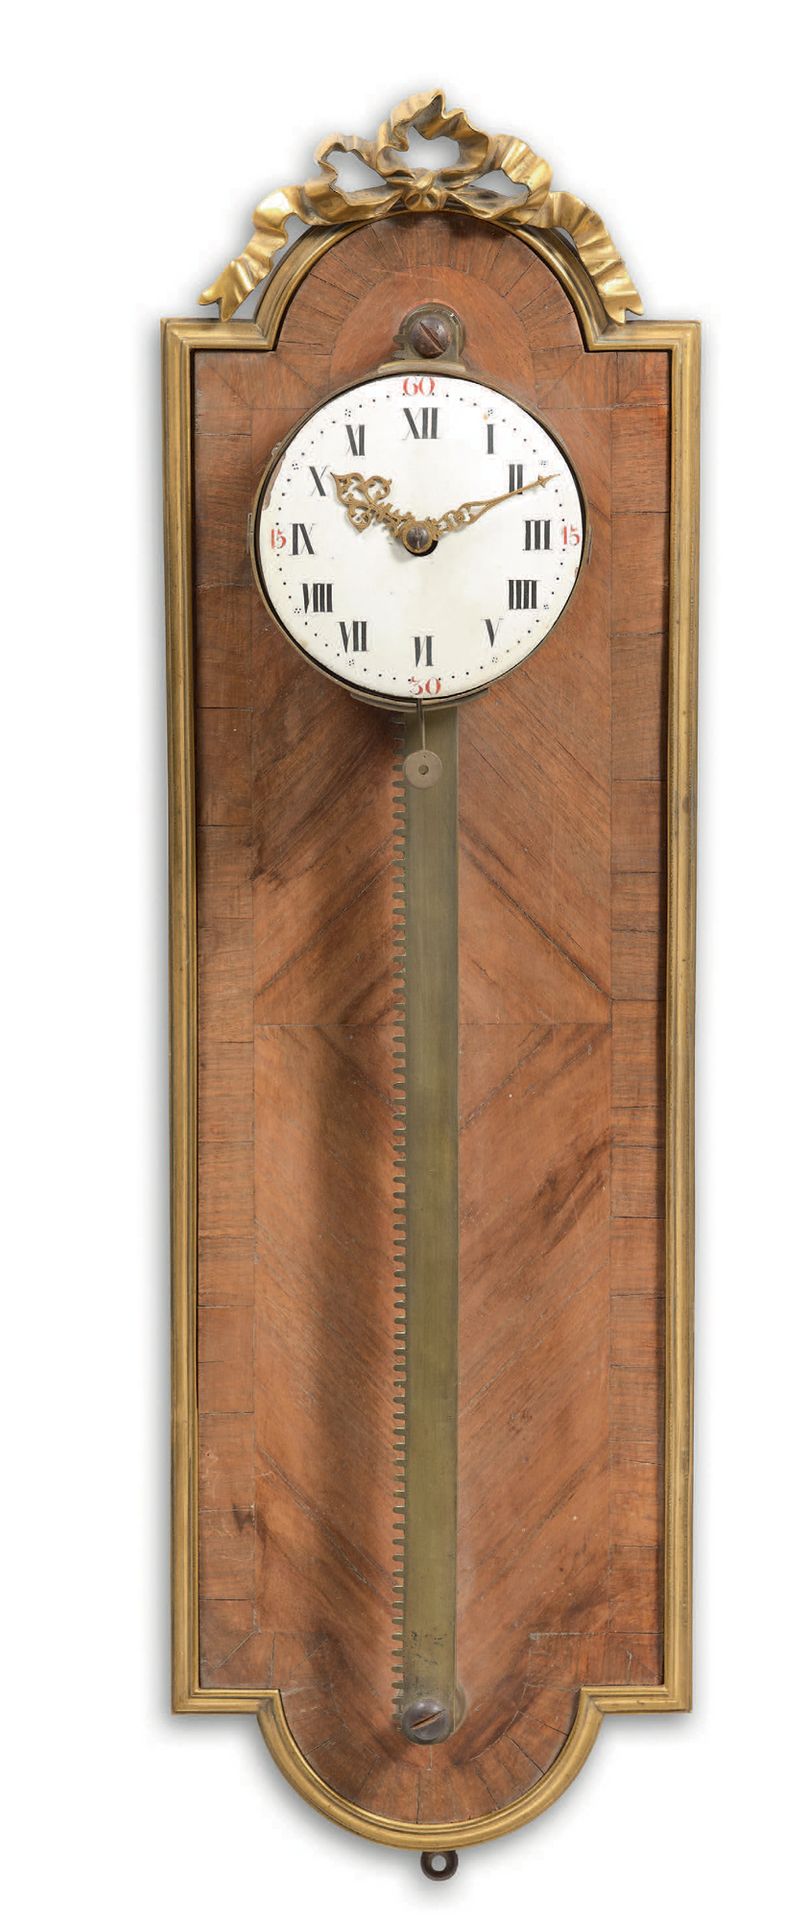 TRAVAIL FRANCAIS - Fin XVIIIe siècle 带 "齿轮齿条 "发条的挂钟
中央部分在一个紫罗兰色的木头支架上，在青铜框架中镶嵌着树&hellip;